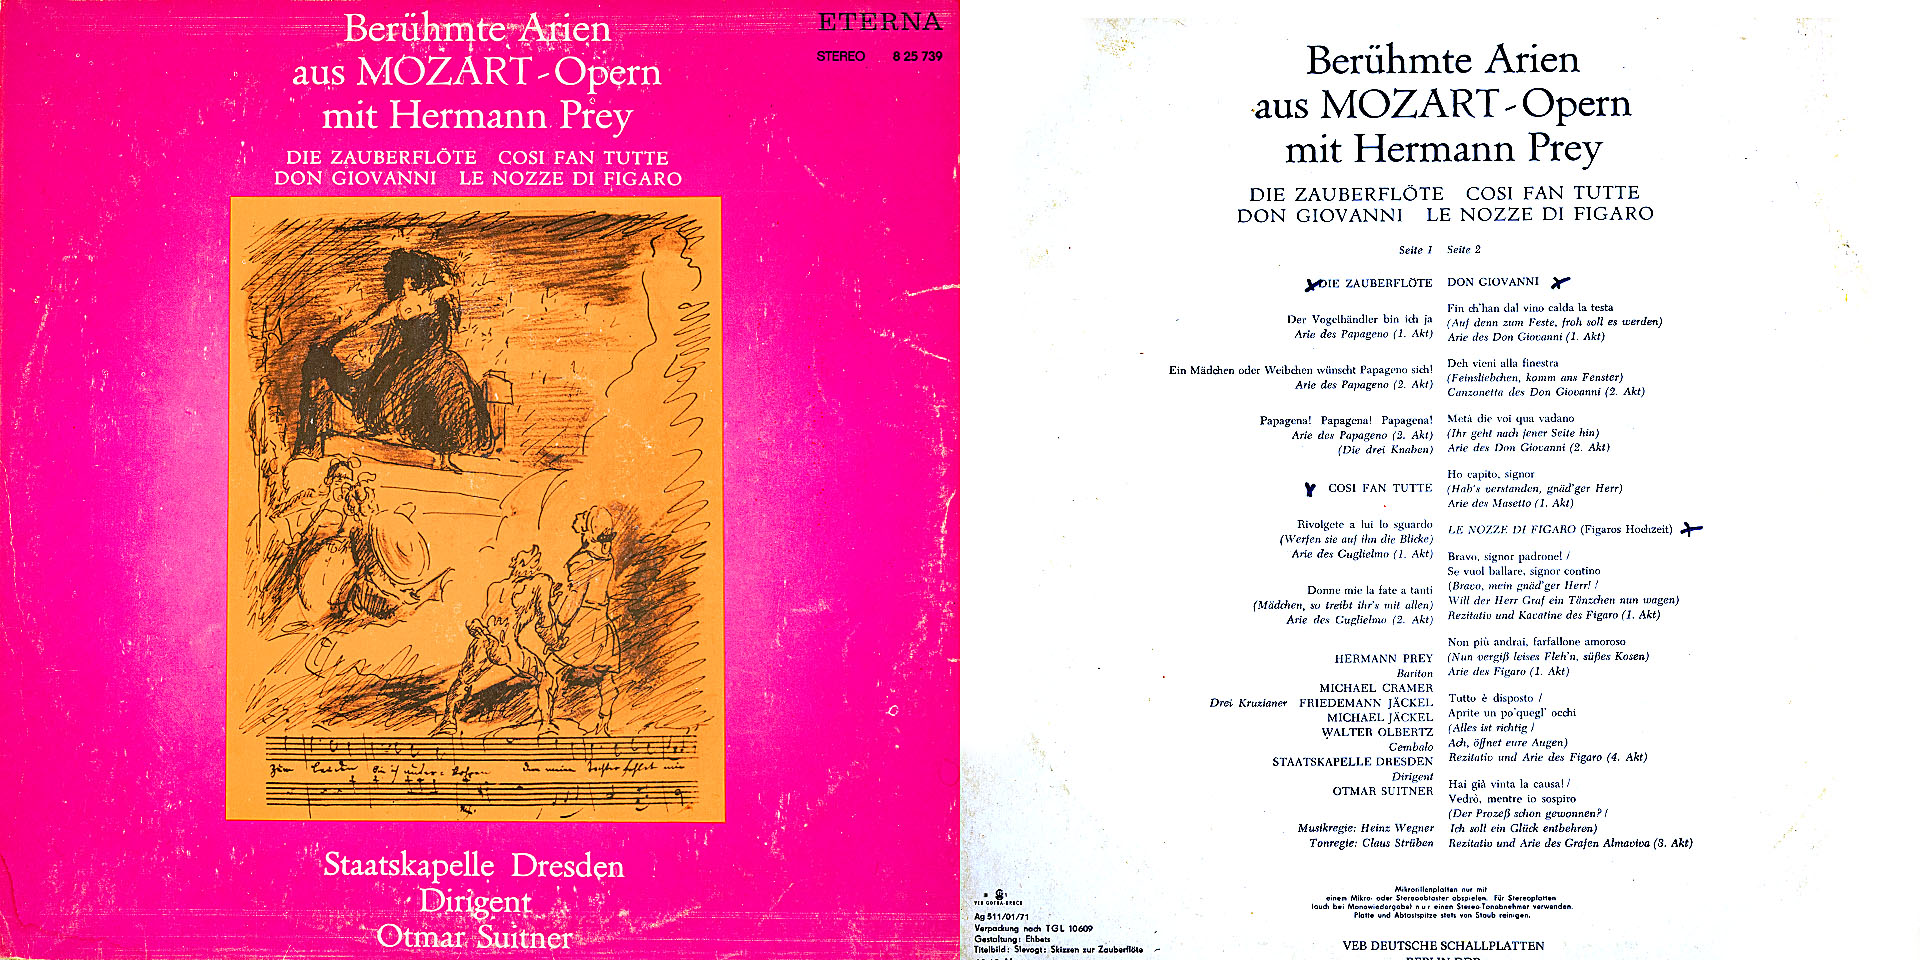 Berühmte Arien aus Mozart - Opern - Hermann Prey mit der Staatskapelle Dresden, Dirigent  Otmar Suitner